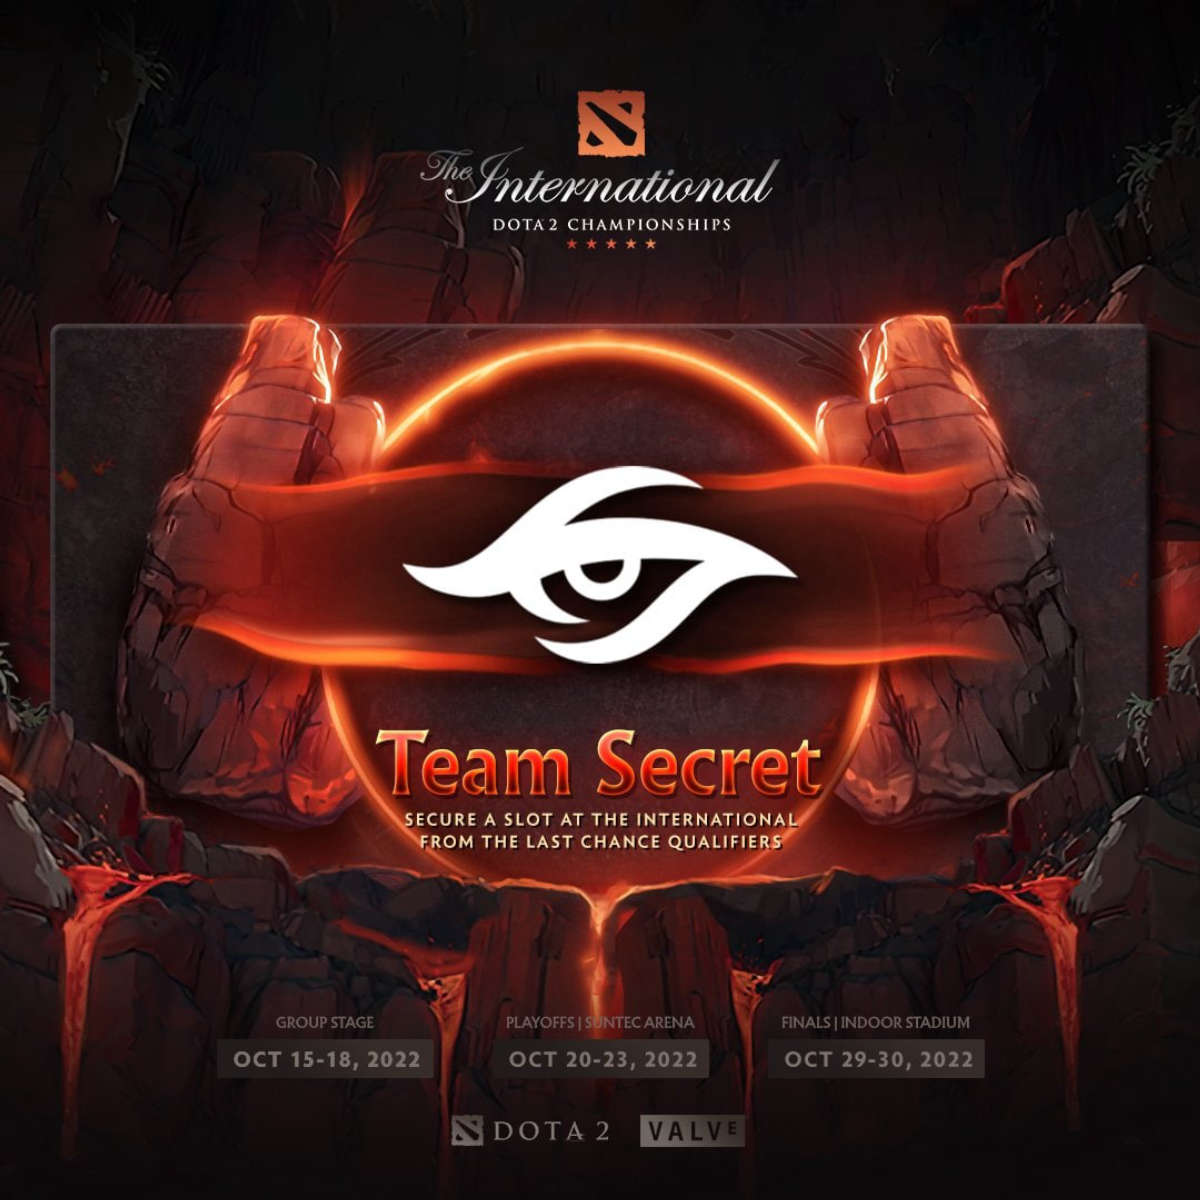 Team Secret will play at The International 2022